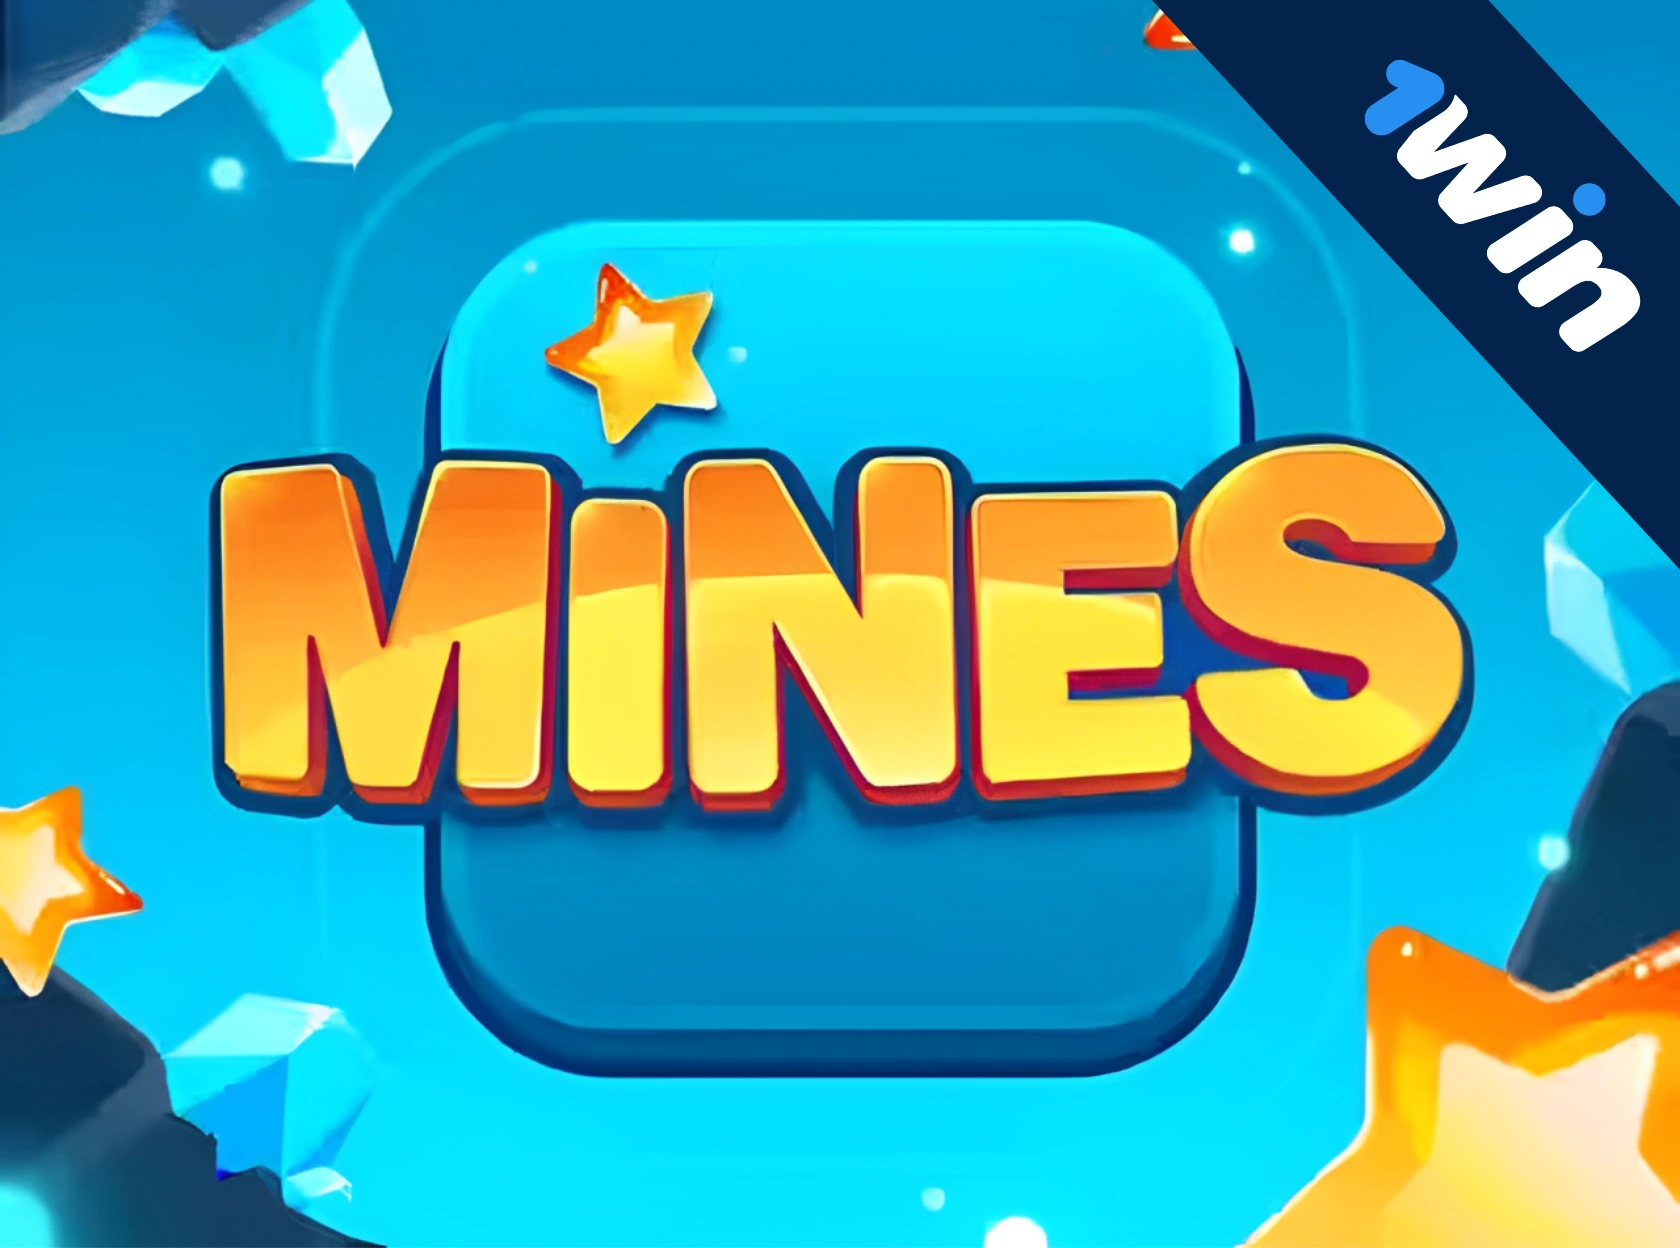 1win Mines — играй в «Сапера» на деньги!